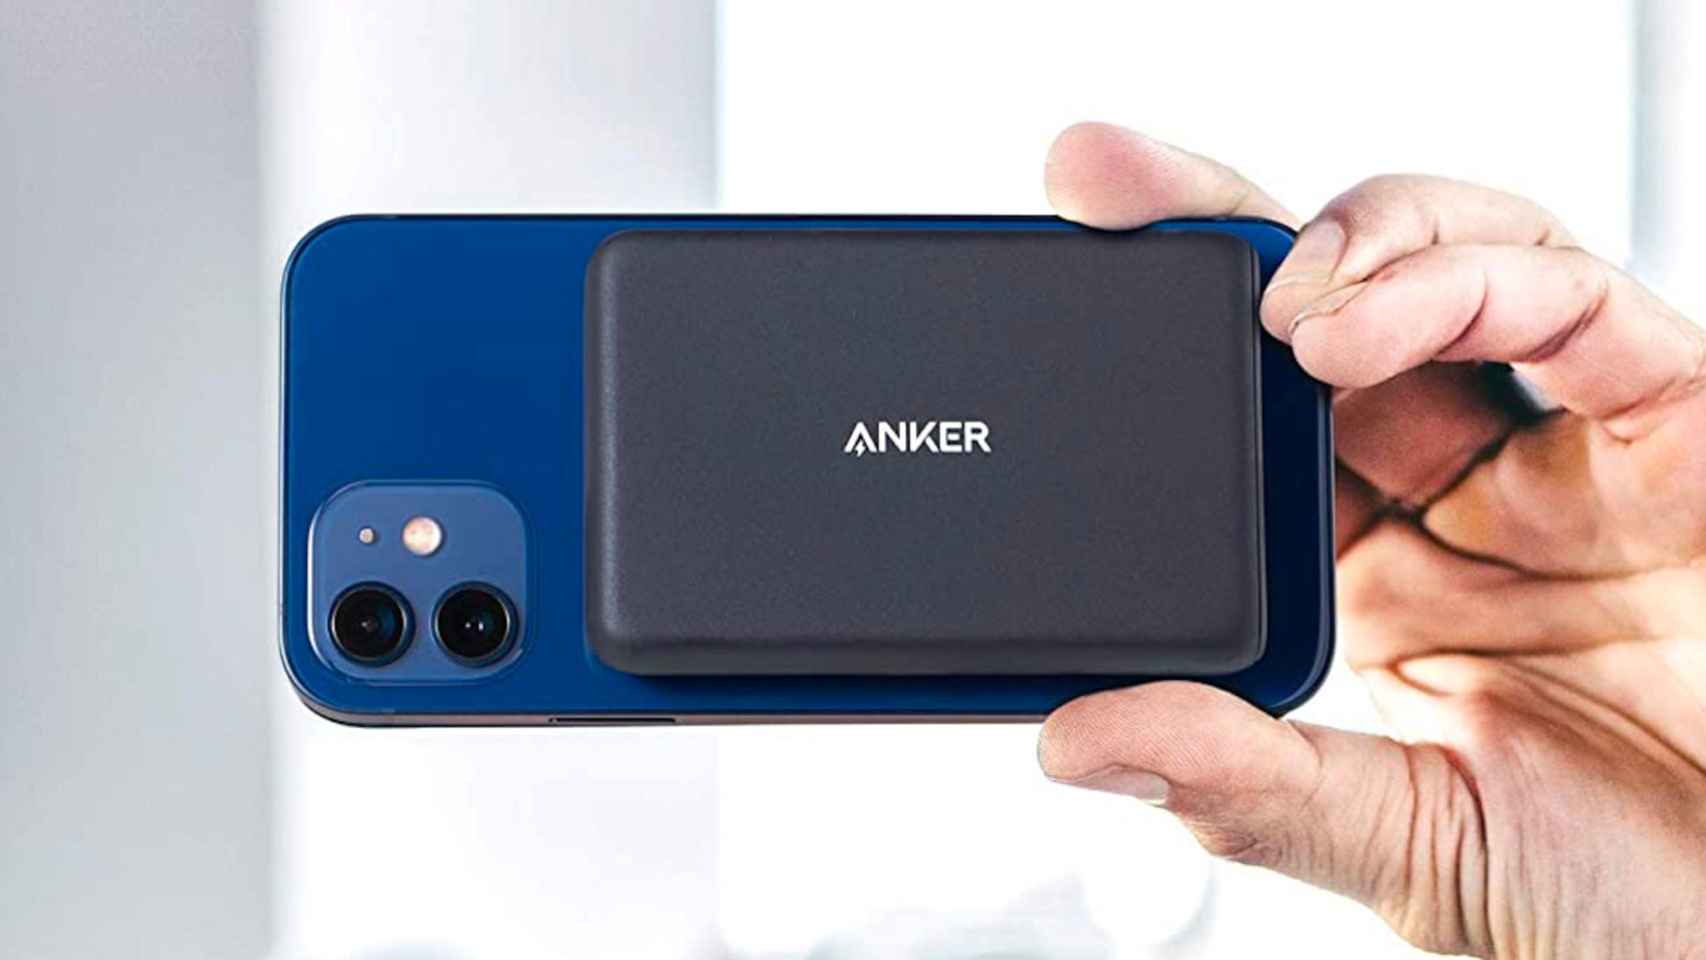 La batería externa de Anker para el iPhone